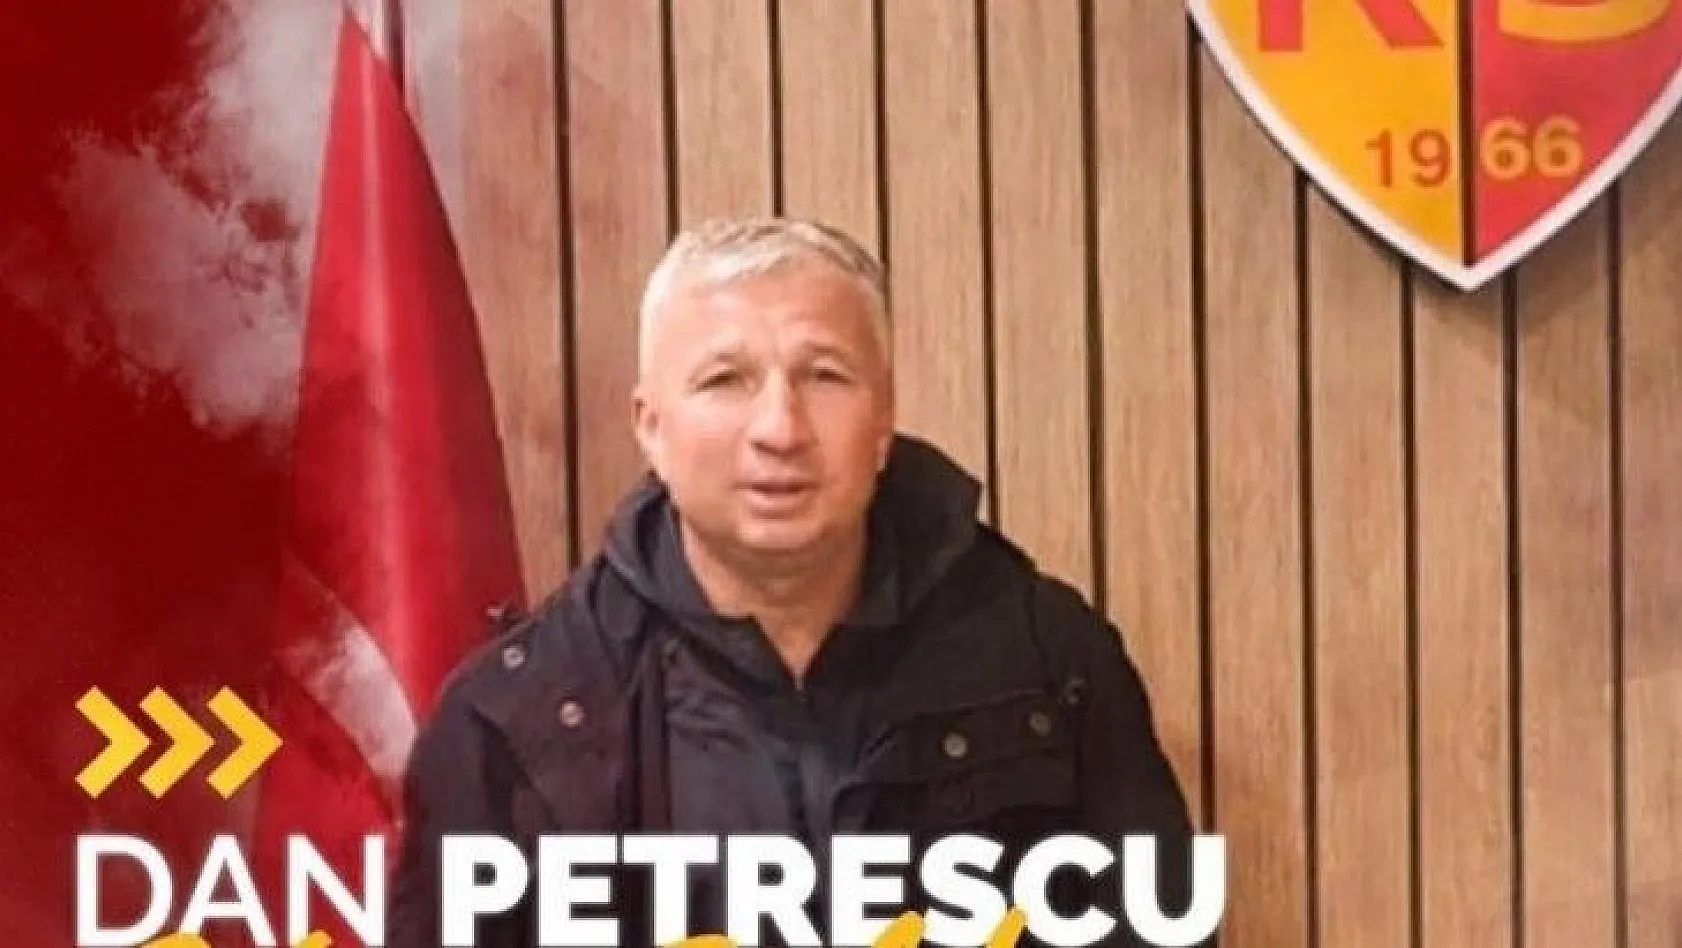 Petrescu imzayı attı